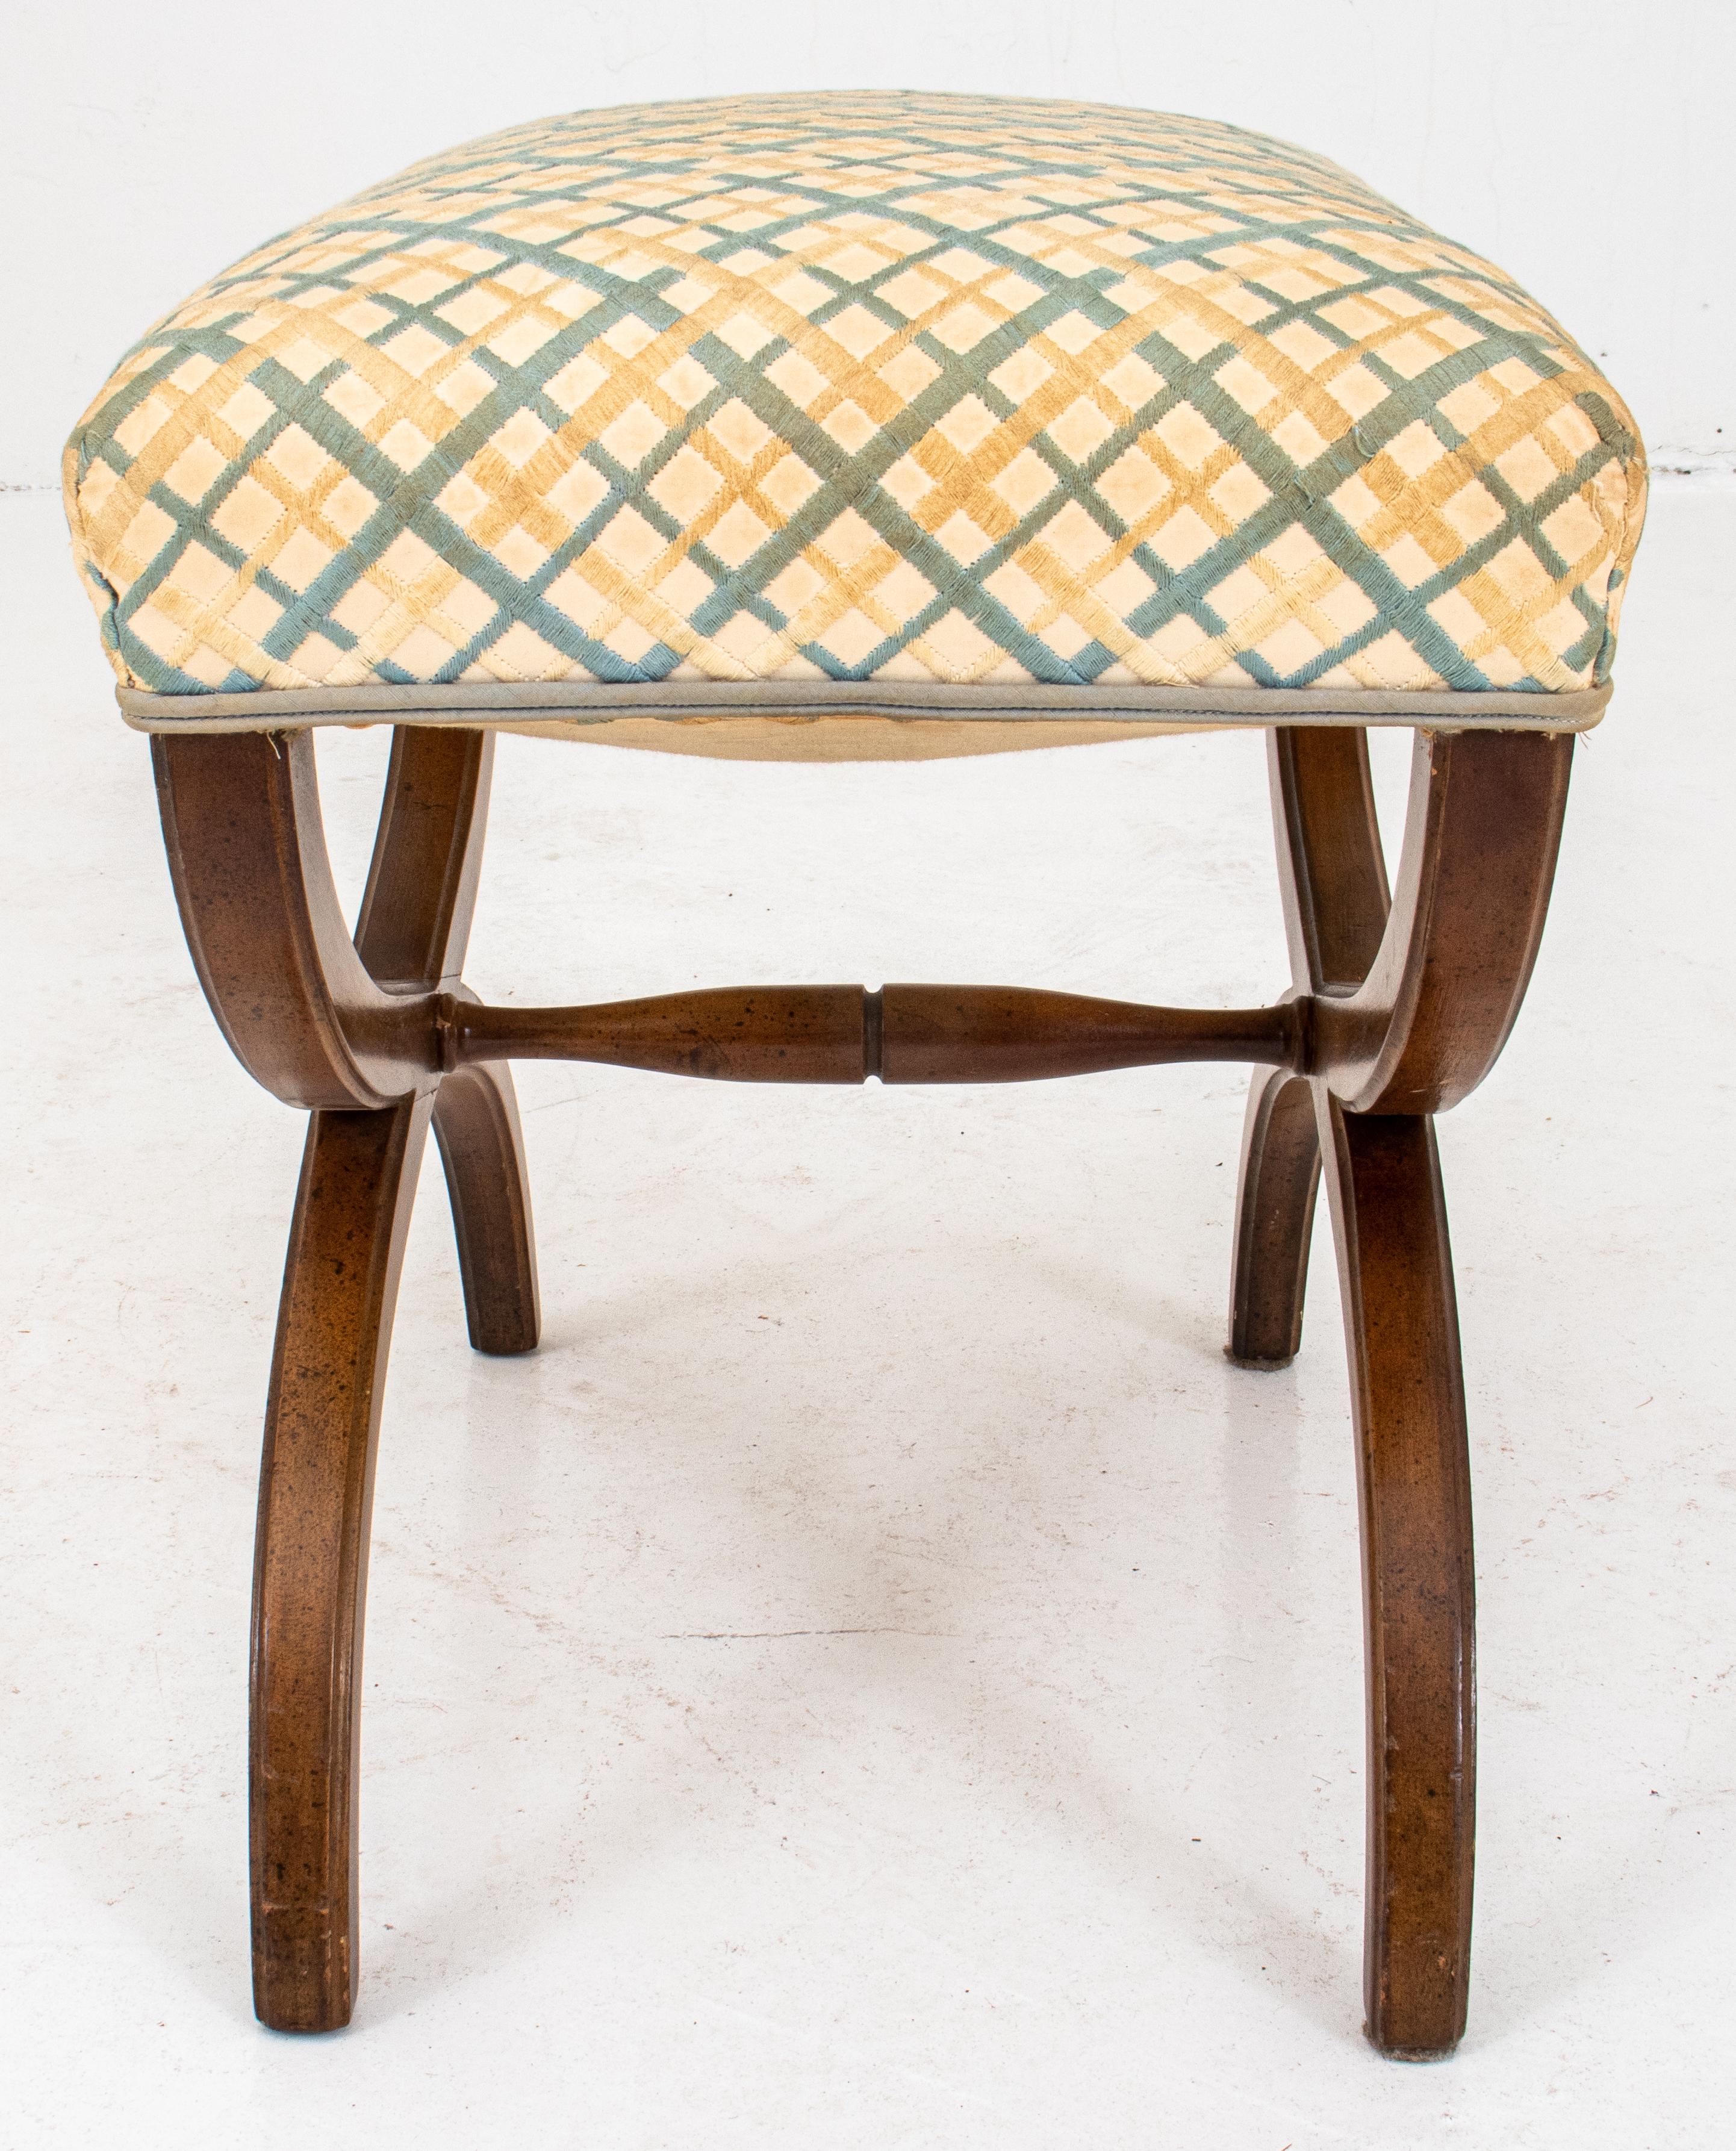 Regency Style Upholstered Wooden Bench 1